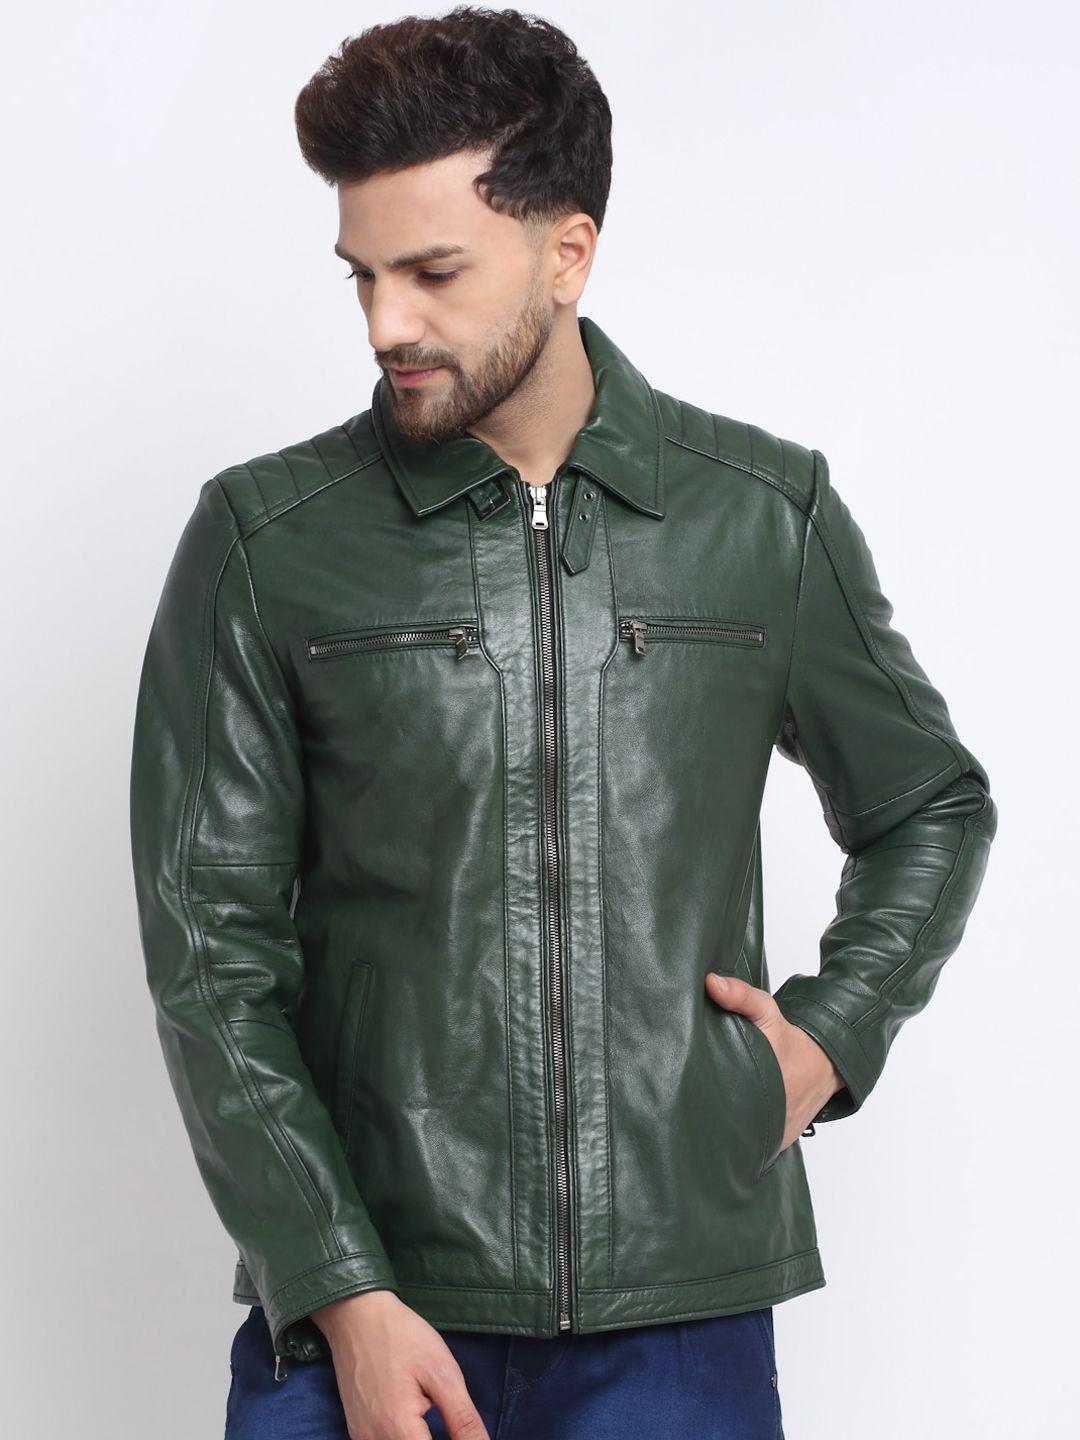 teakwood-leathers-men-water-resistant-leather-jacket